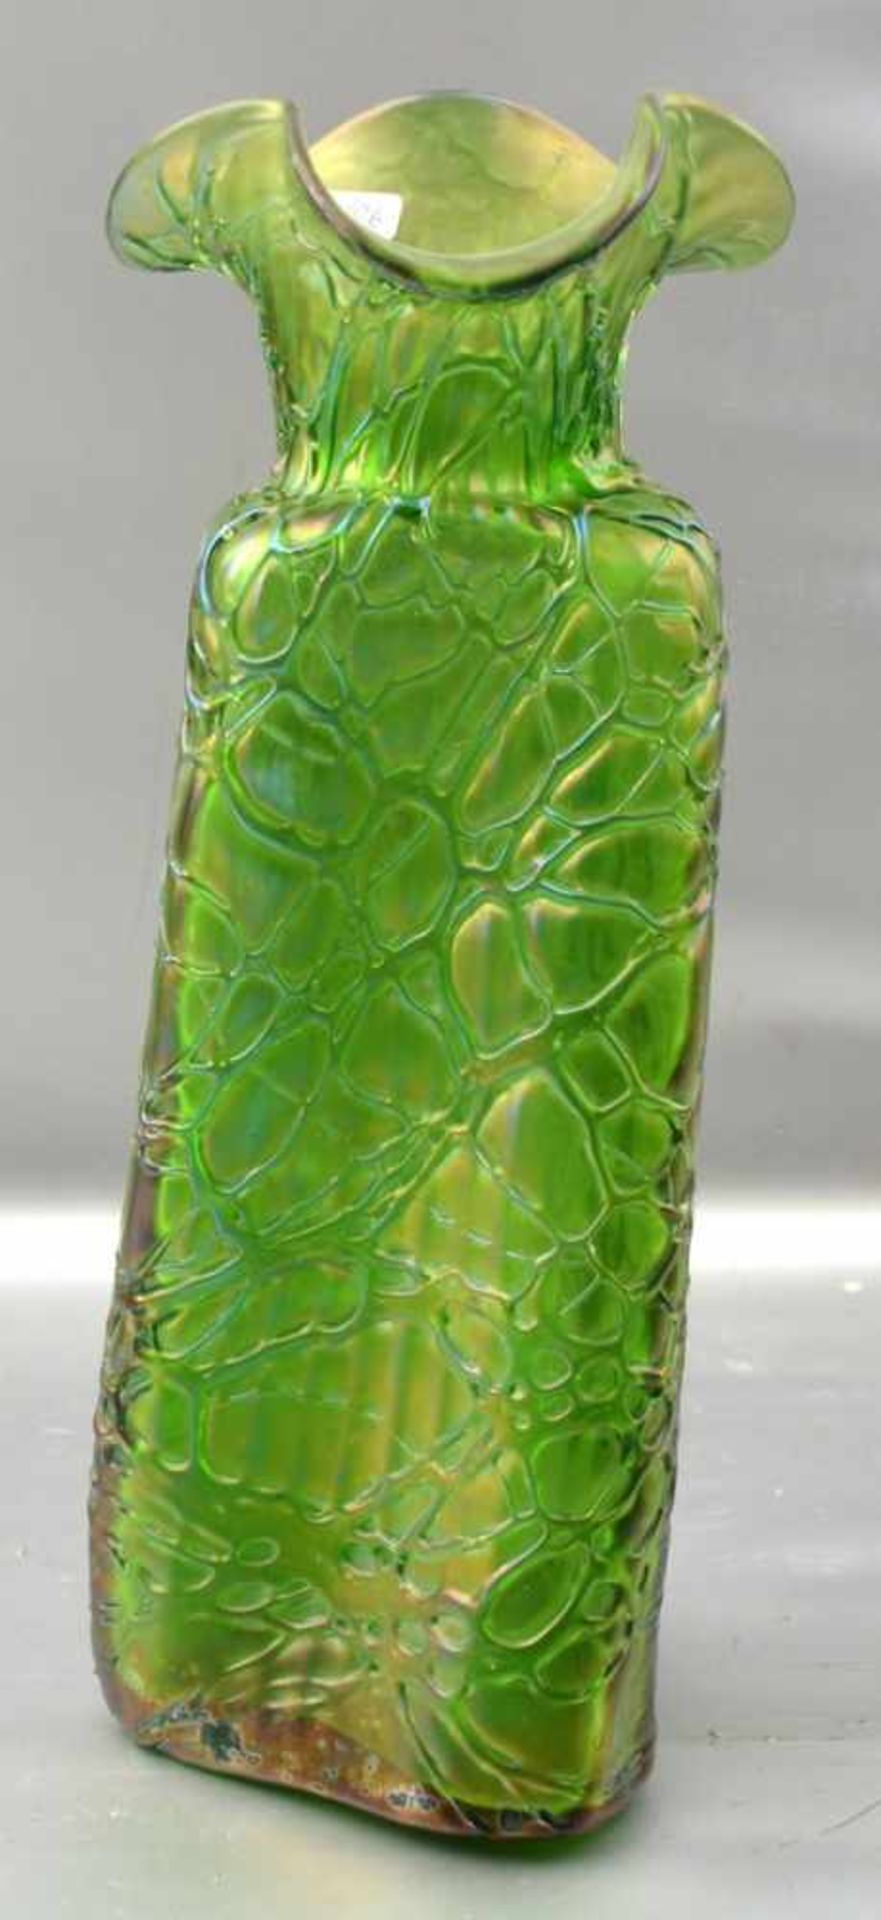 Vase grünes Glas, dreieckig, gewellter Rand, changierend, H 28 cm, FM Palme König, um 1900